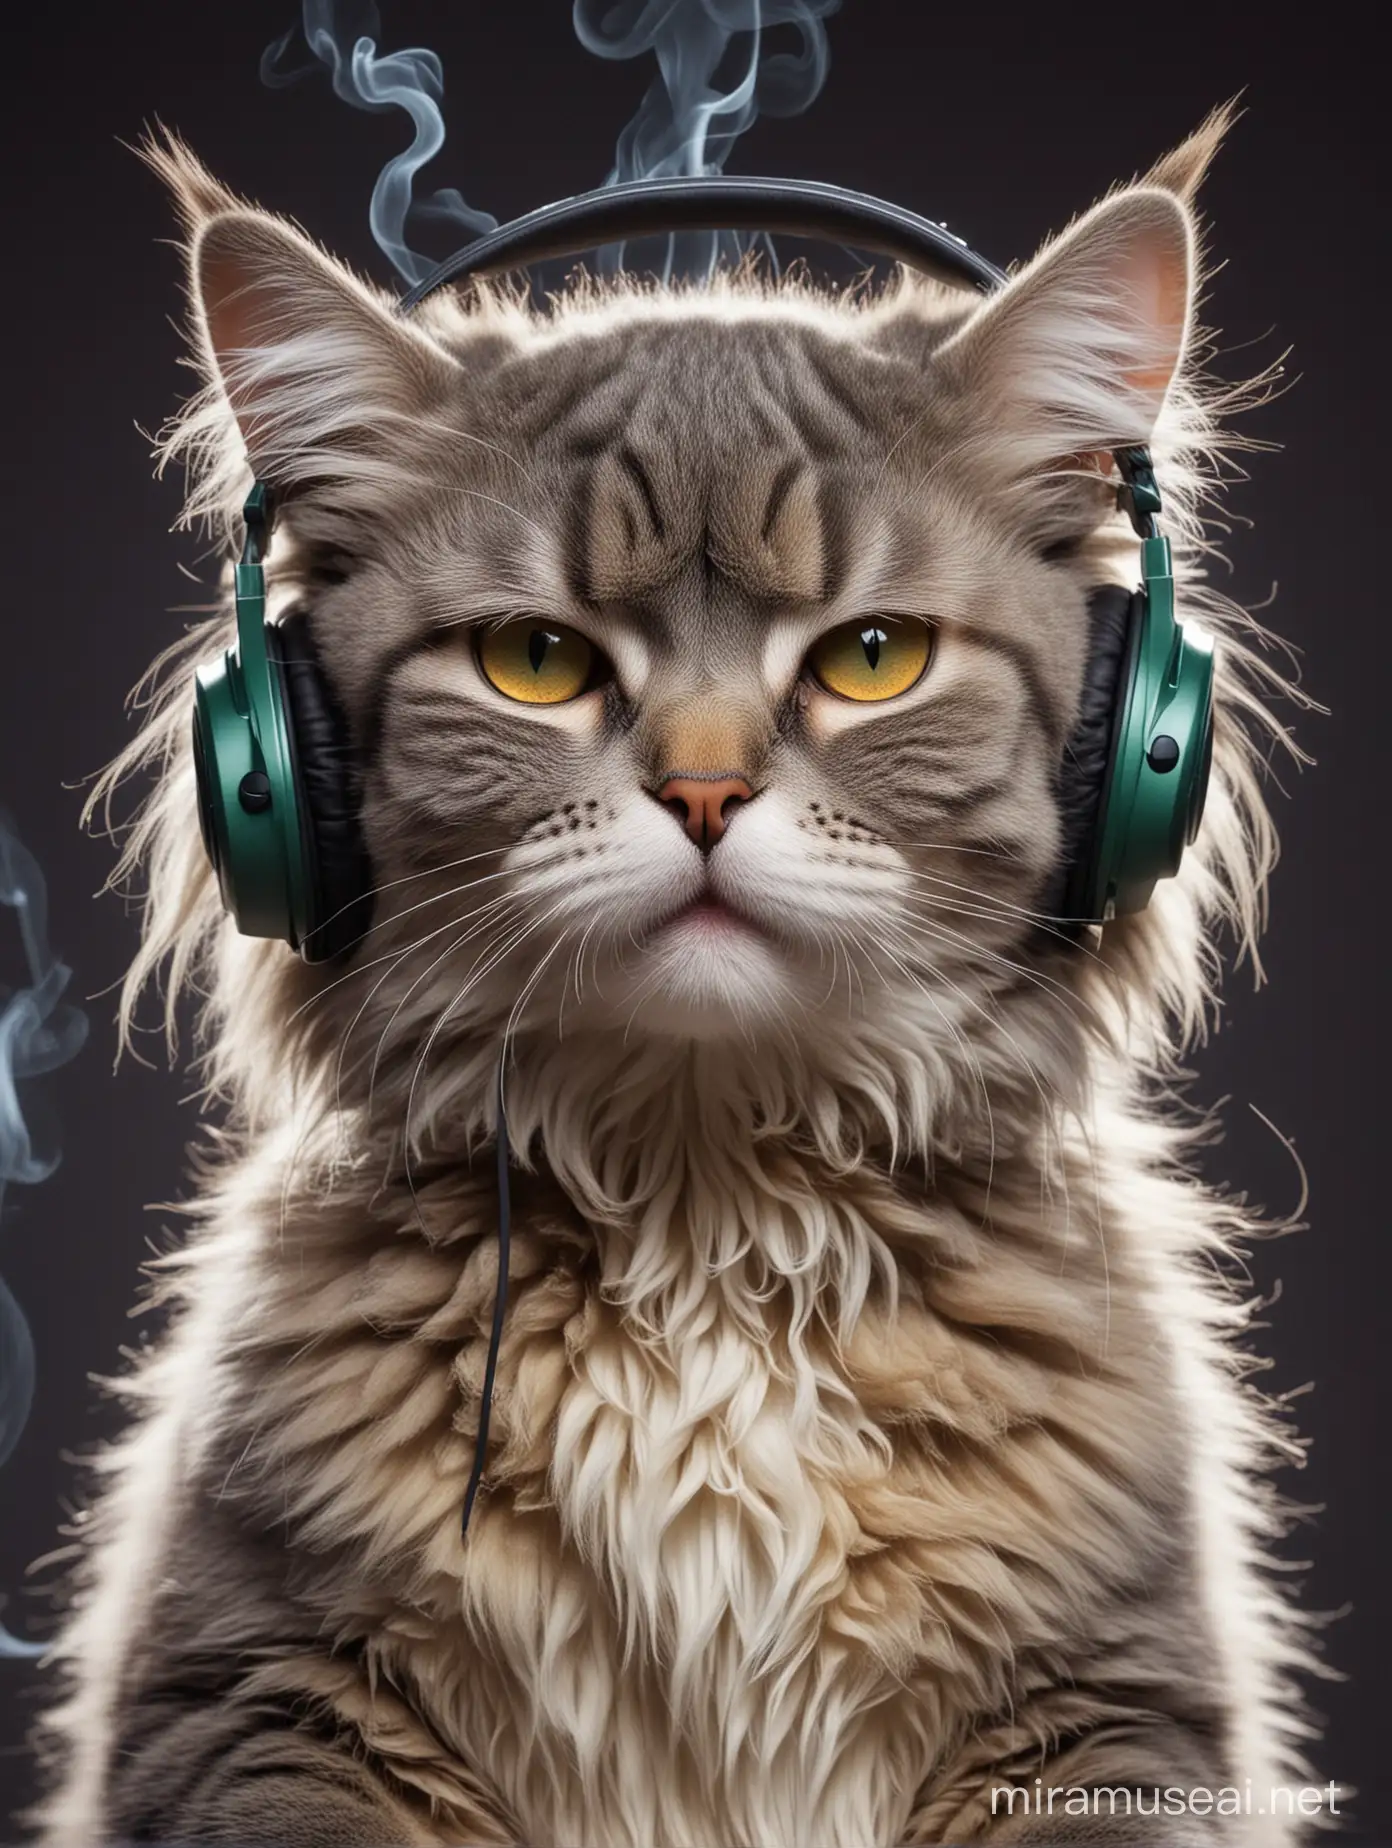 Fuzzy Cat with Headphones Producing MarijuanaInfused Music